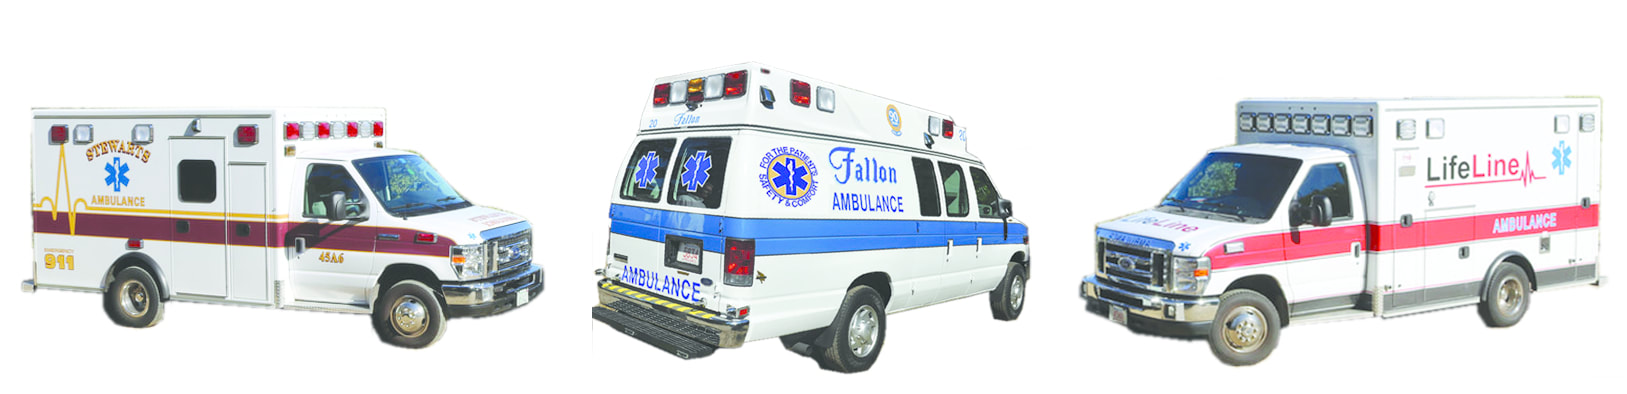 Transformative Ambulances